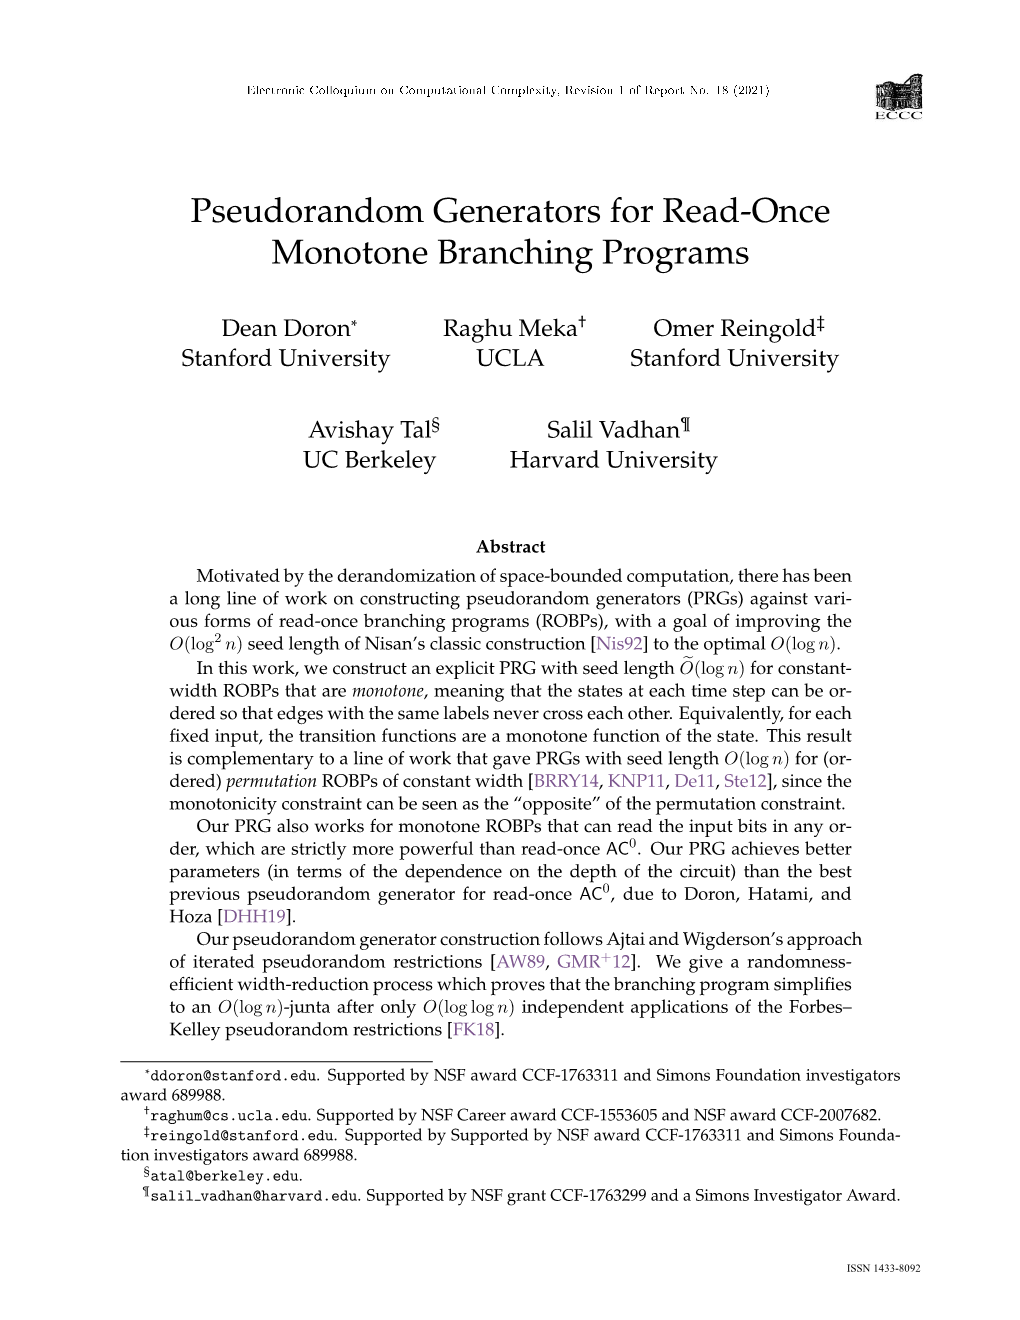 Pseudorandom Generators for Read-Once Monotone Branching Programs